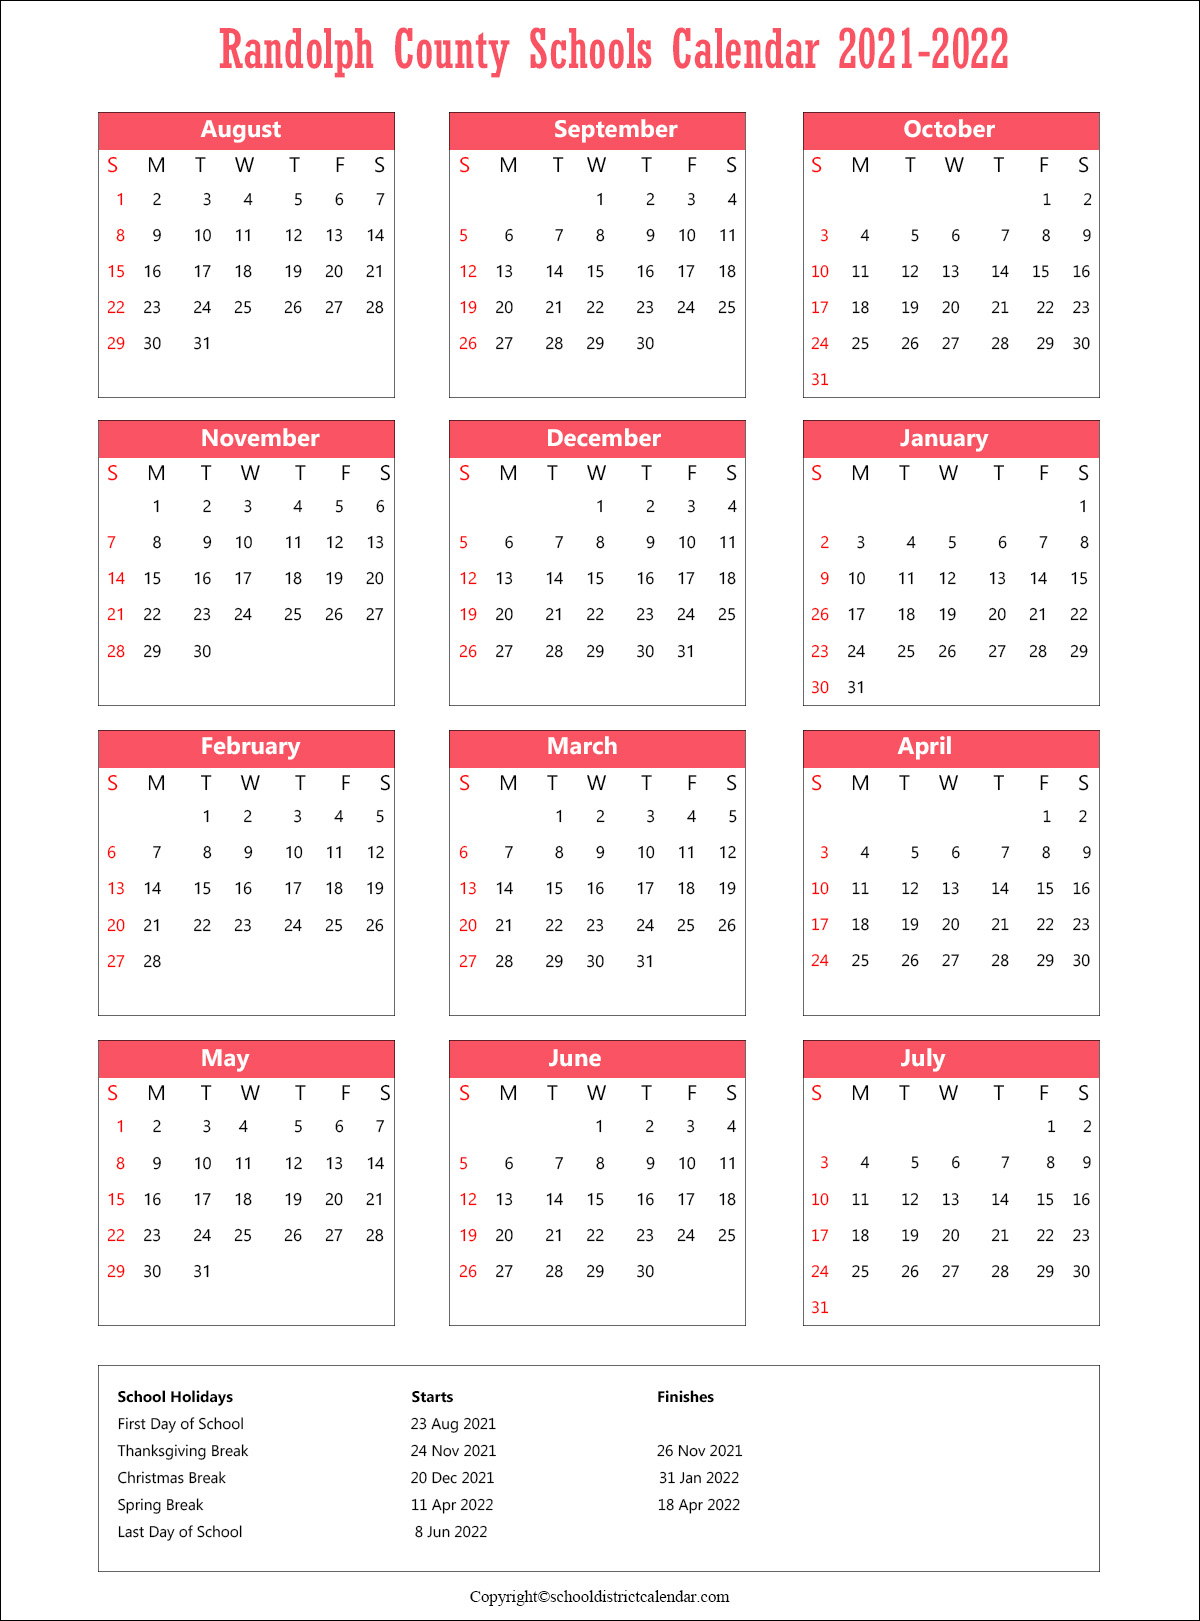 Randolph County Schools Calendar Holidays 2021 2022